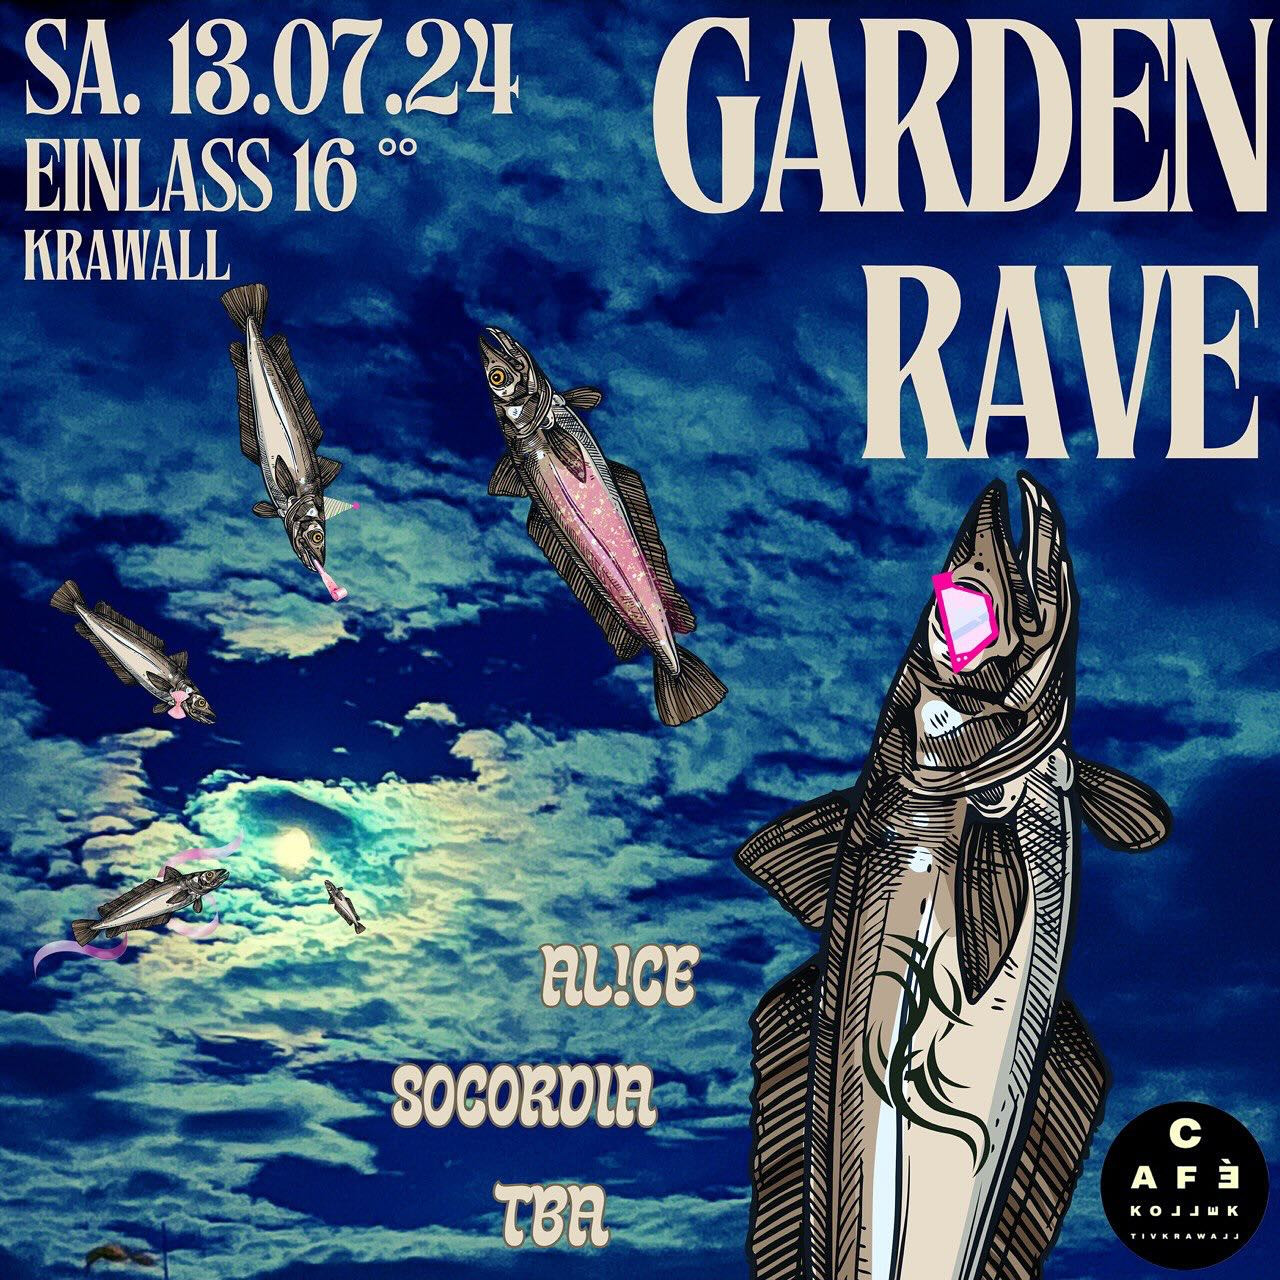 Garden Rave